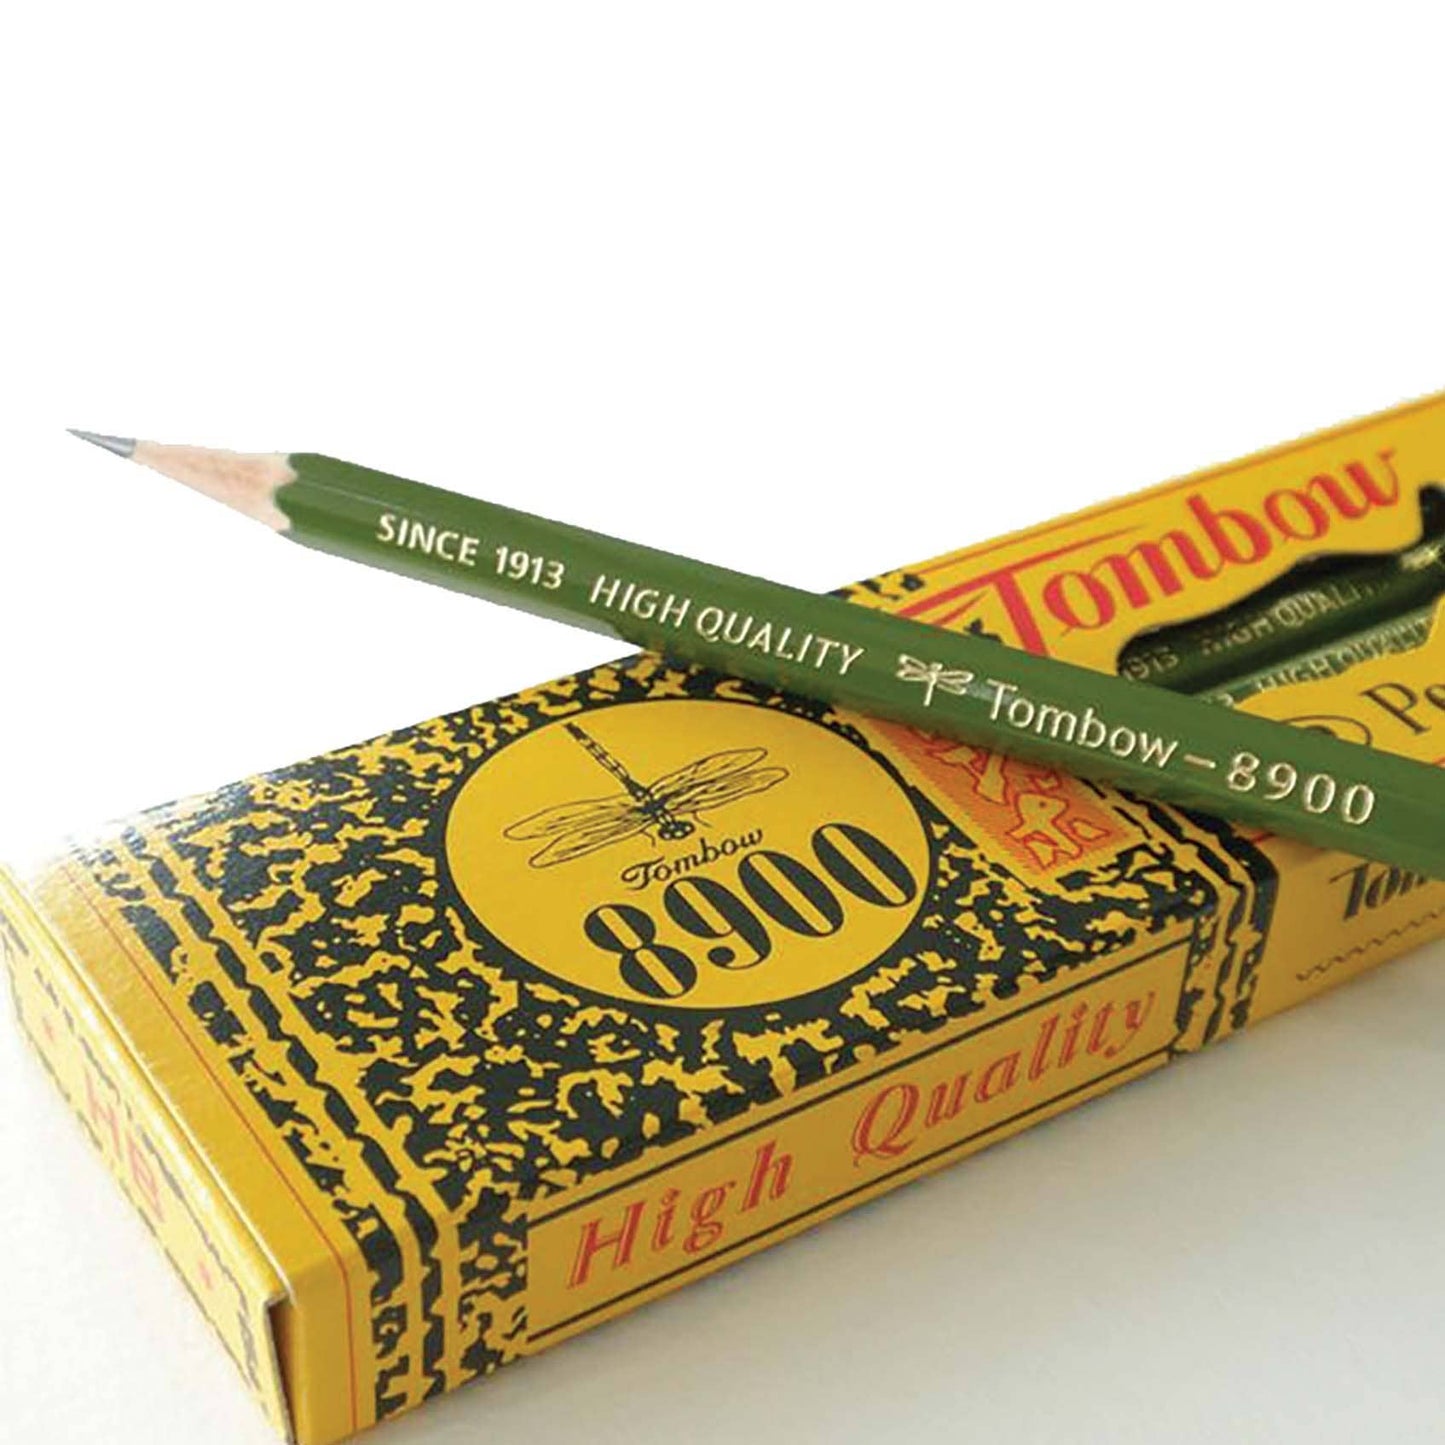 8900 Drawing Pencils - 2B